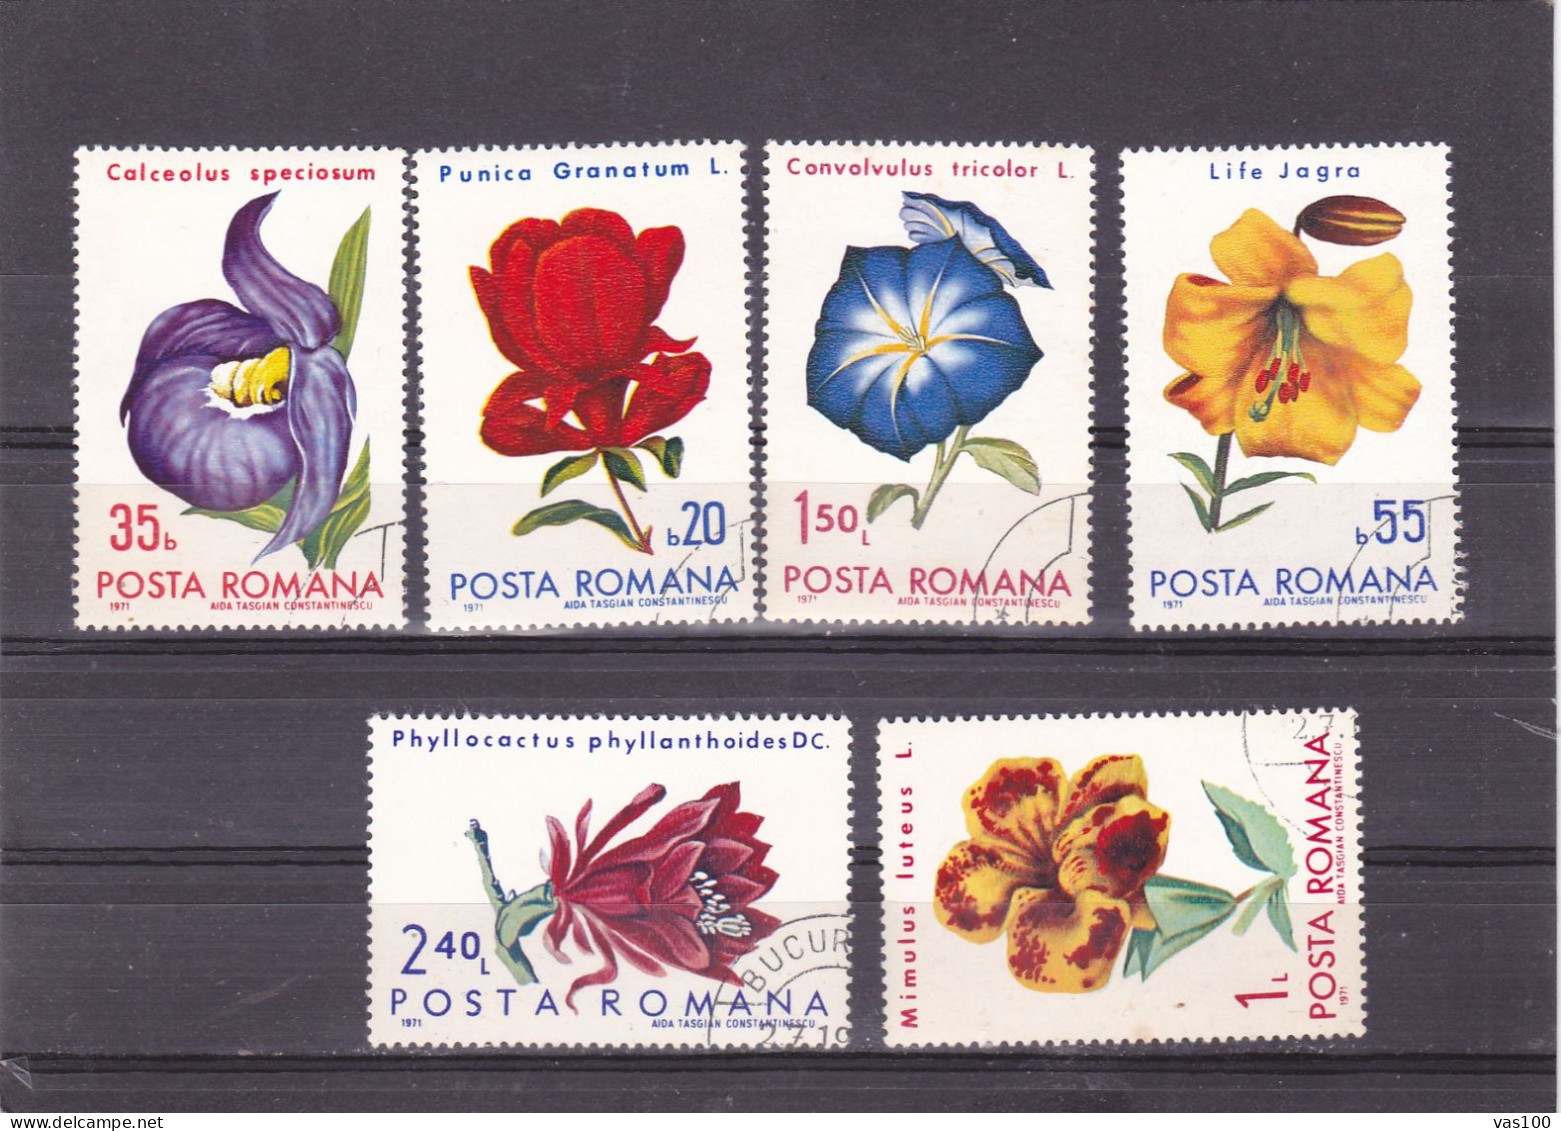 ROMANIA - ROUMANIE - RUMANIEN,Posta Romana 1971 Flowers - Bucharest Botanical Garden - Used Stamps